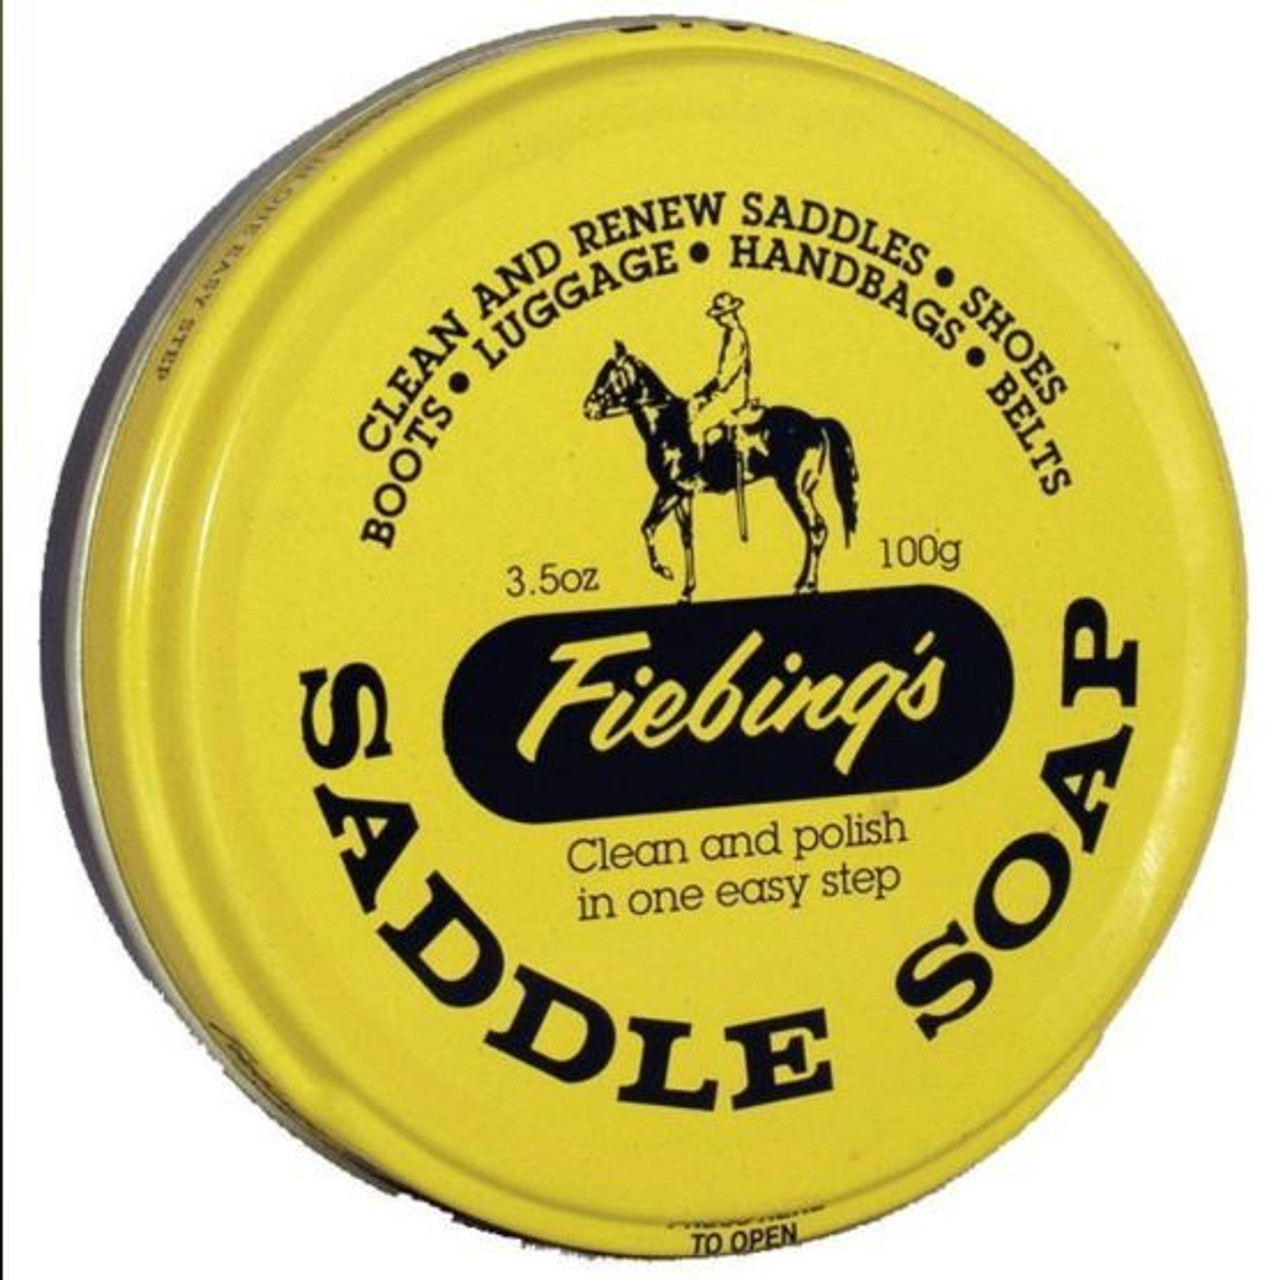 Fiebing's Yellow Saddle Soap, 5 Pound - CountryMax